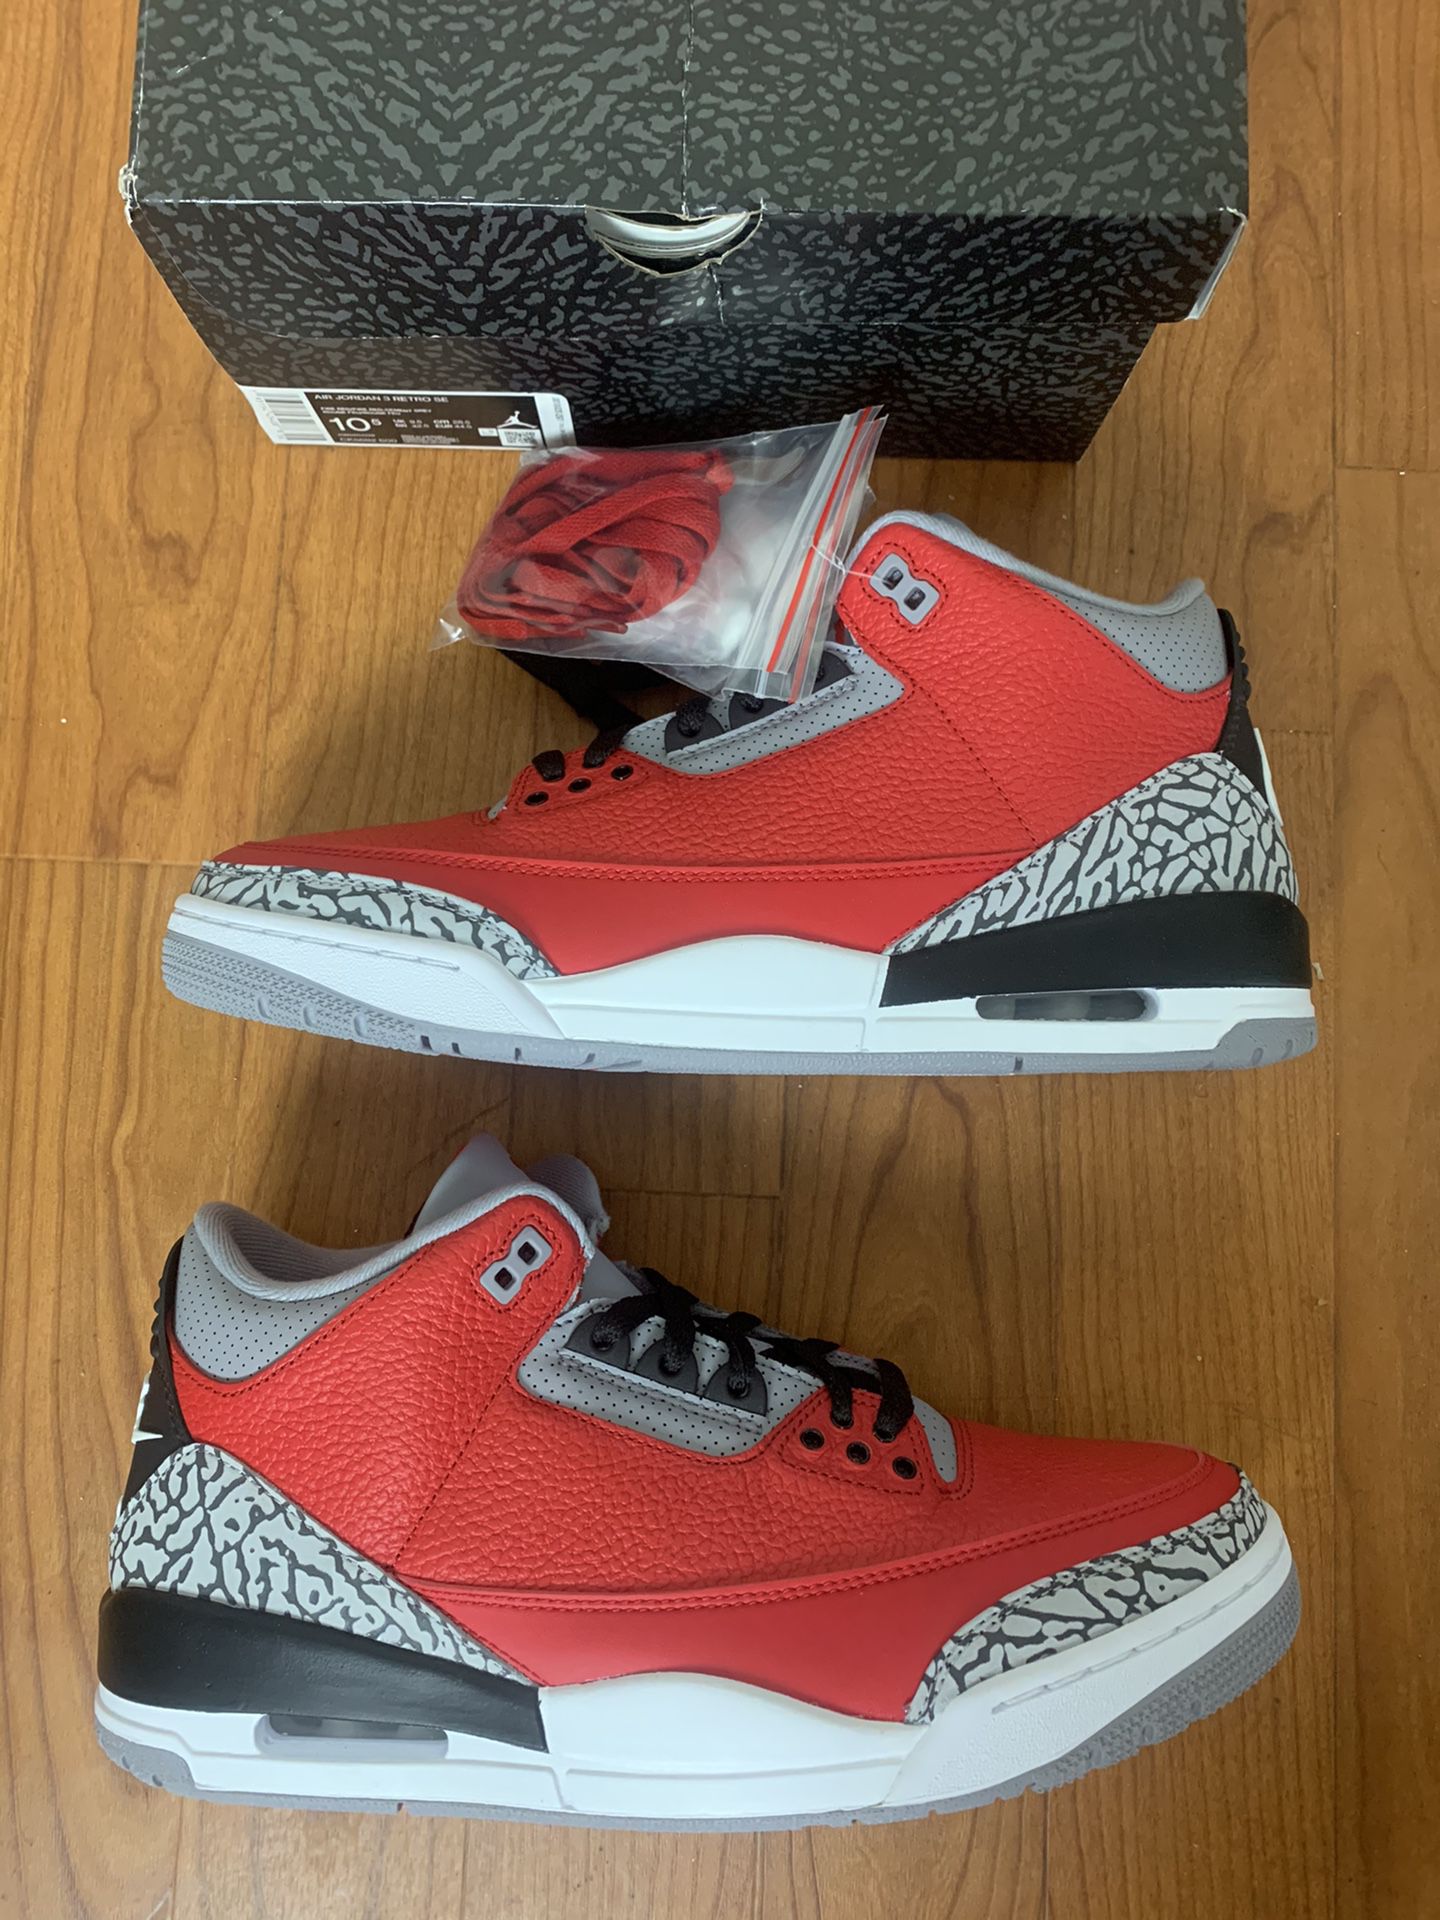 Jordan 3 Red Cement size 10.5